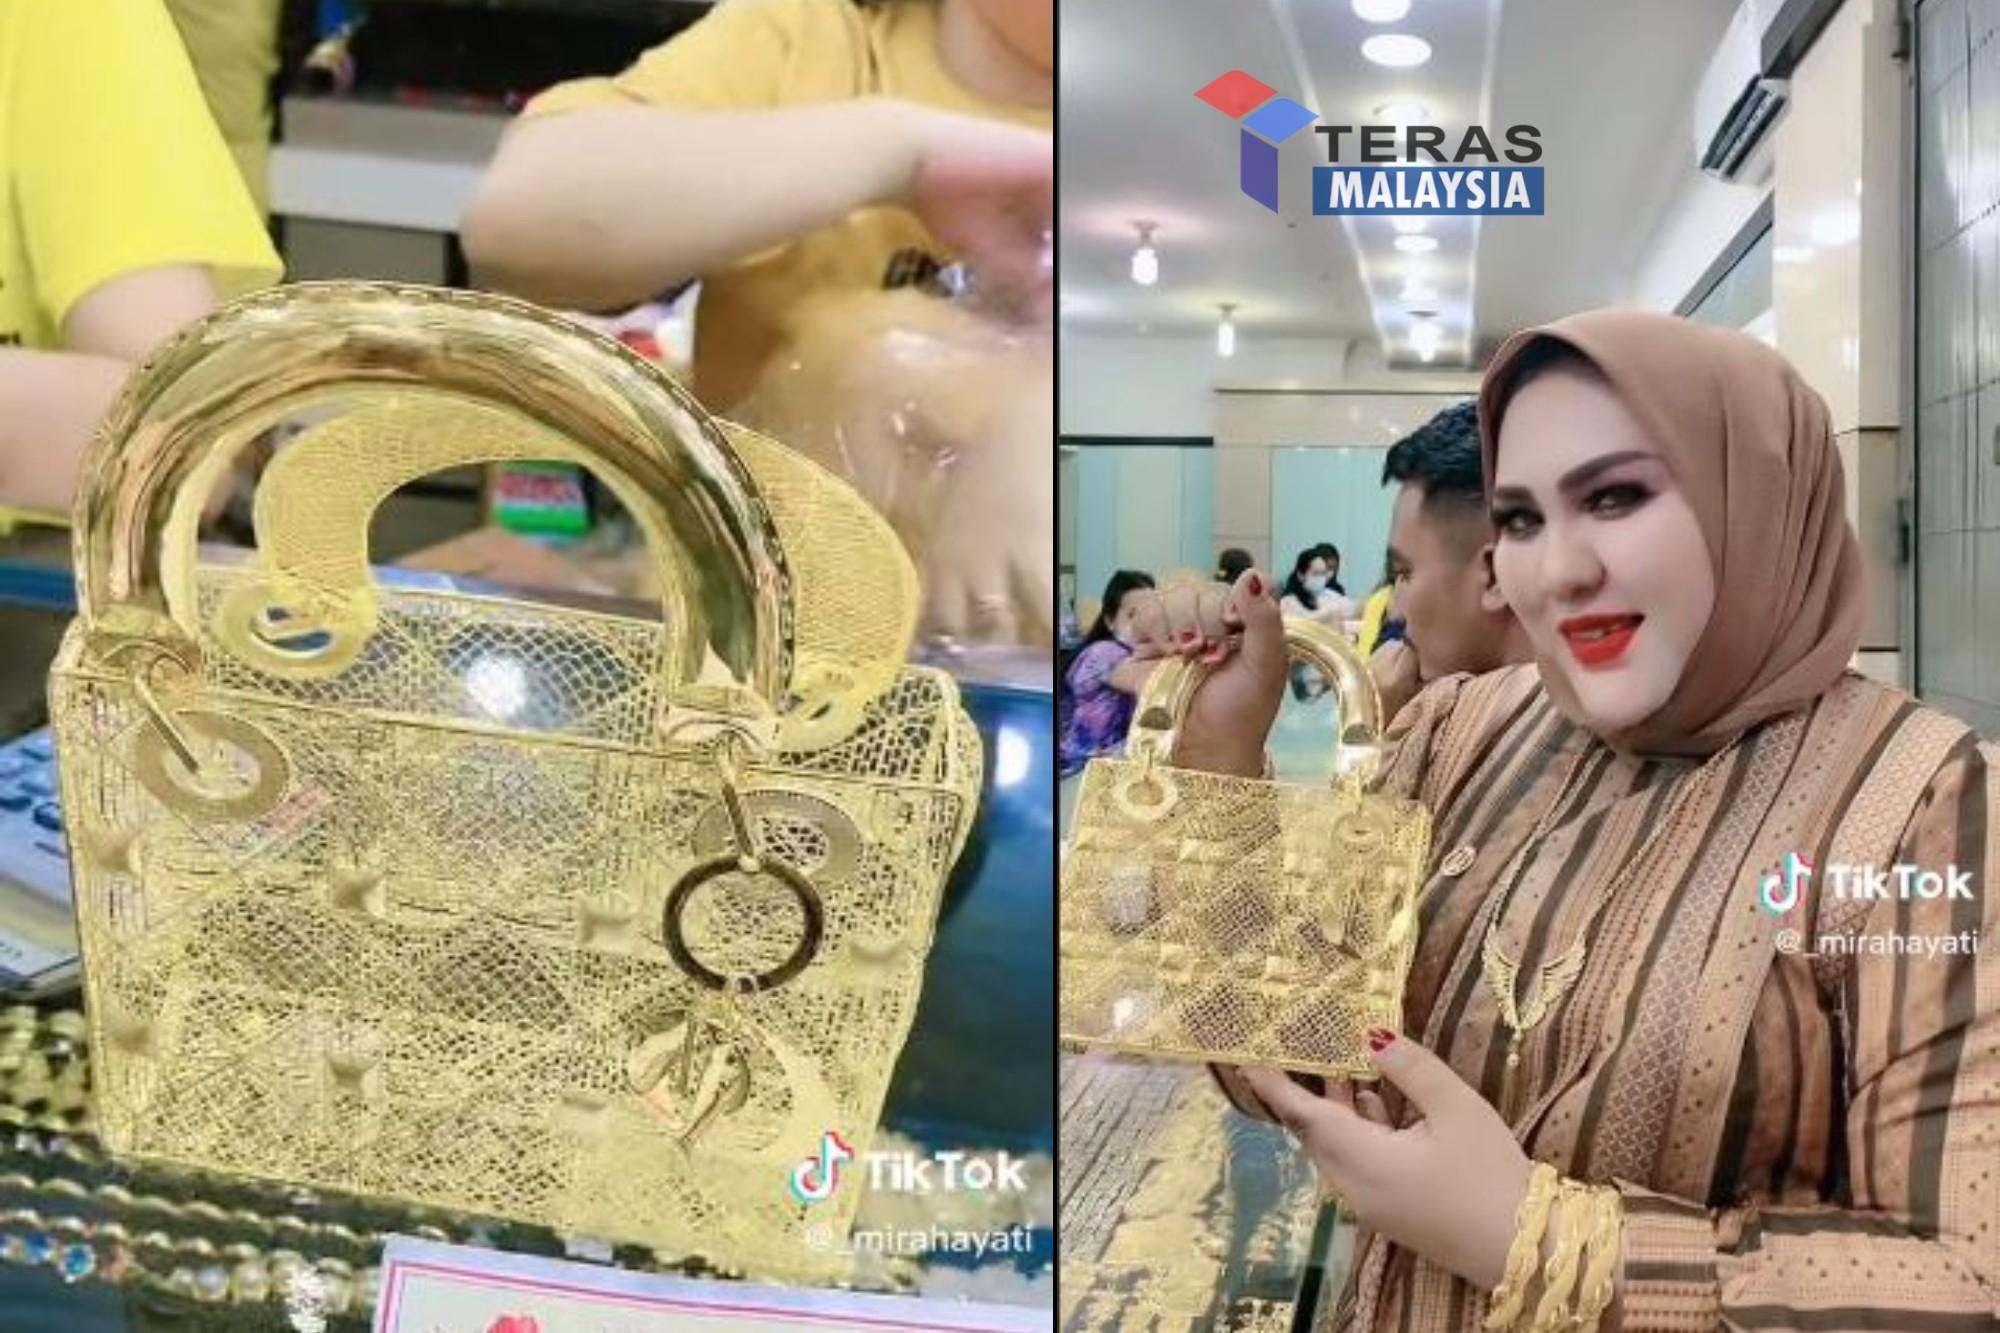 Harga bag tangan emas ini berharga RM150000 tak payah susah pakai barang kemas lepas ni